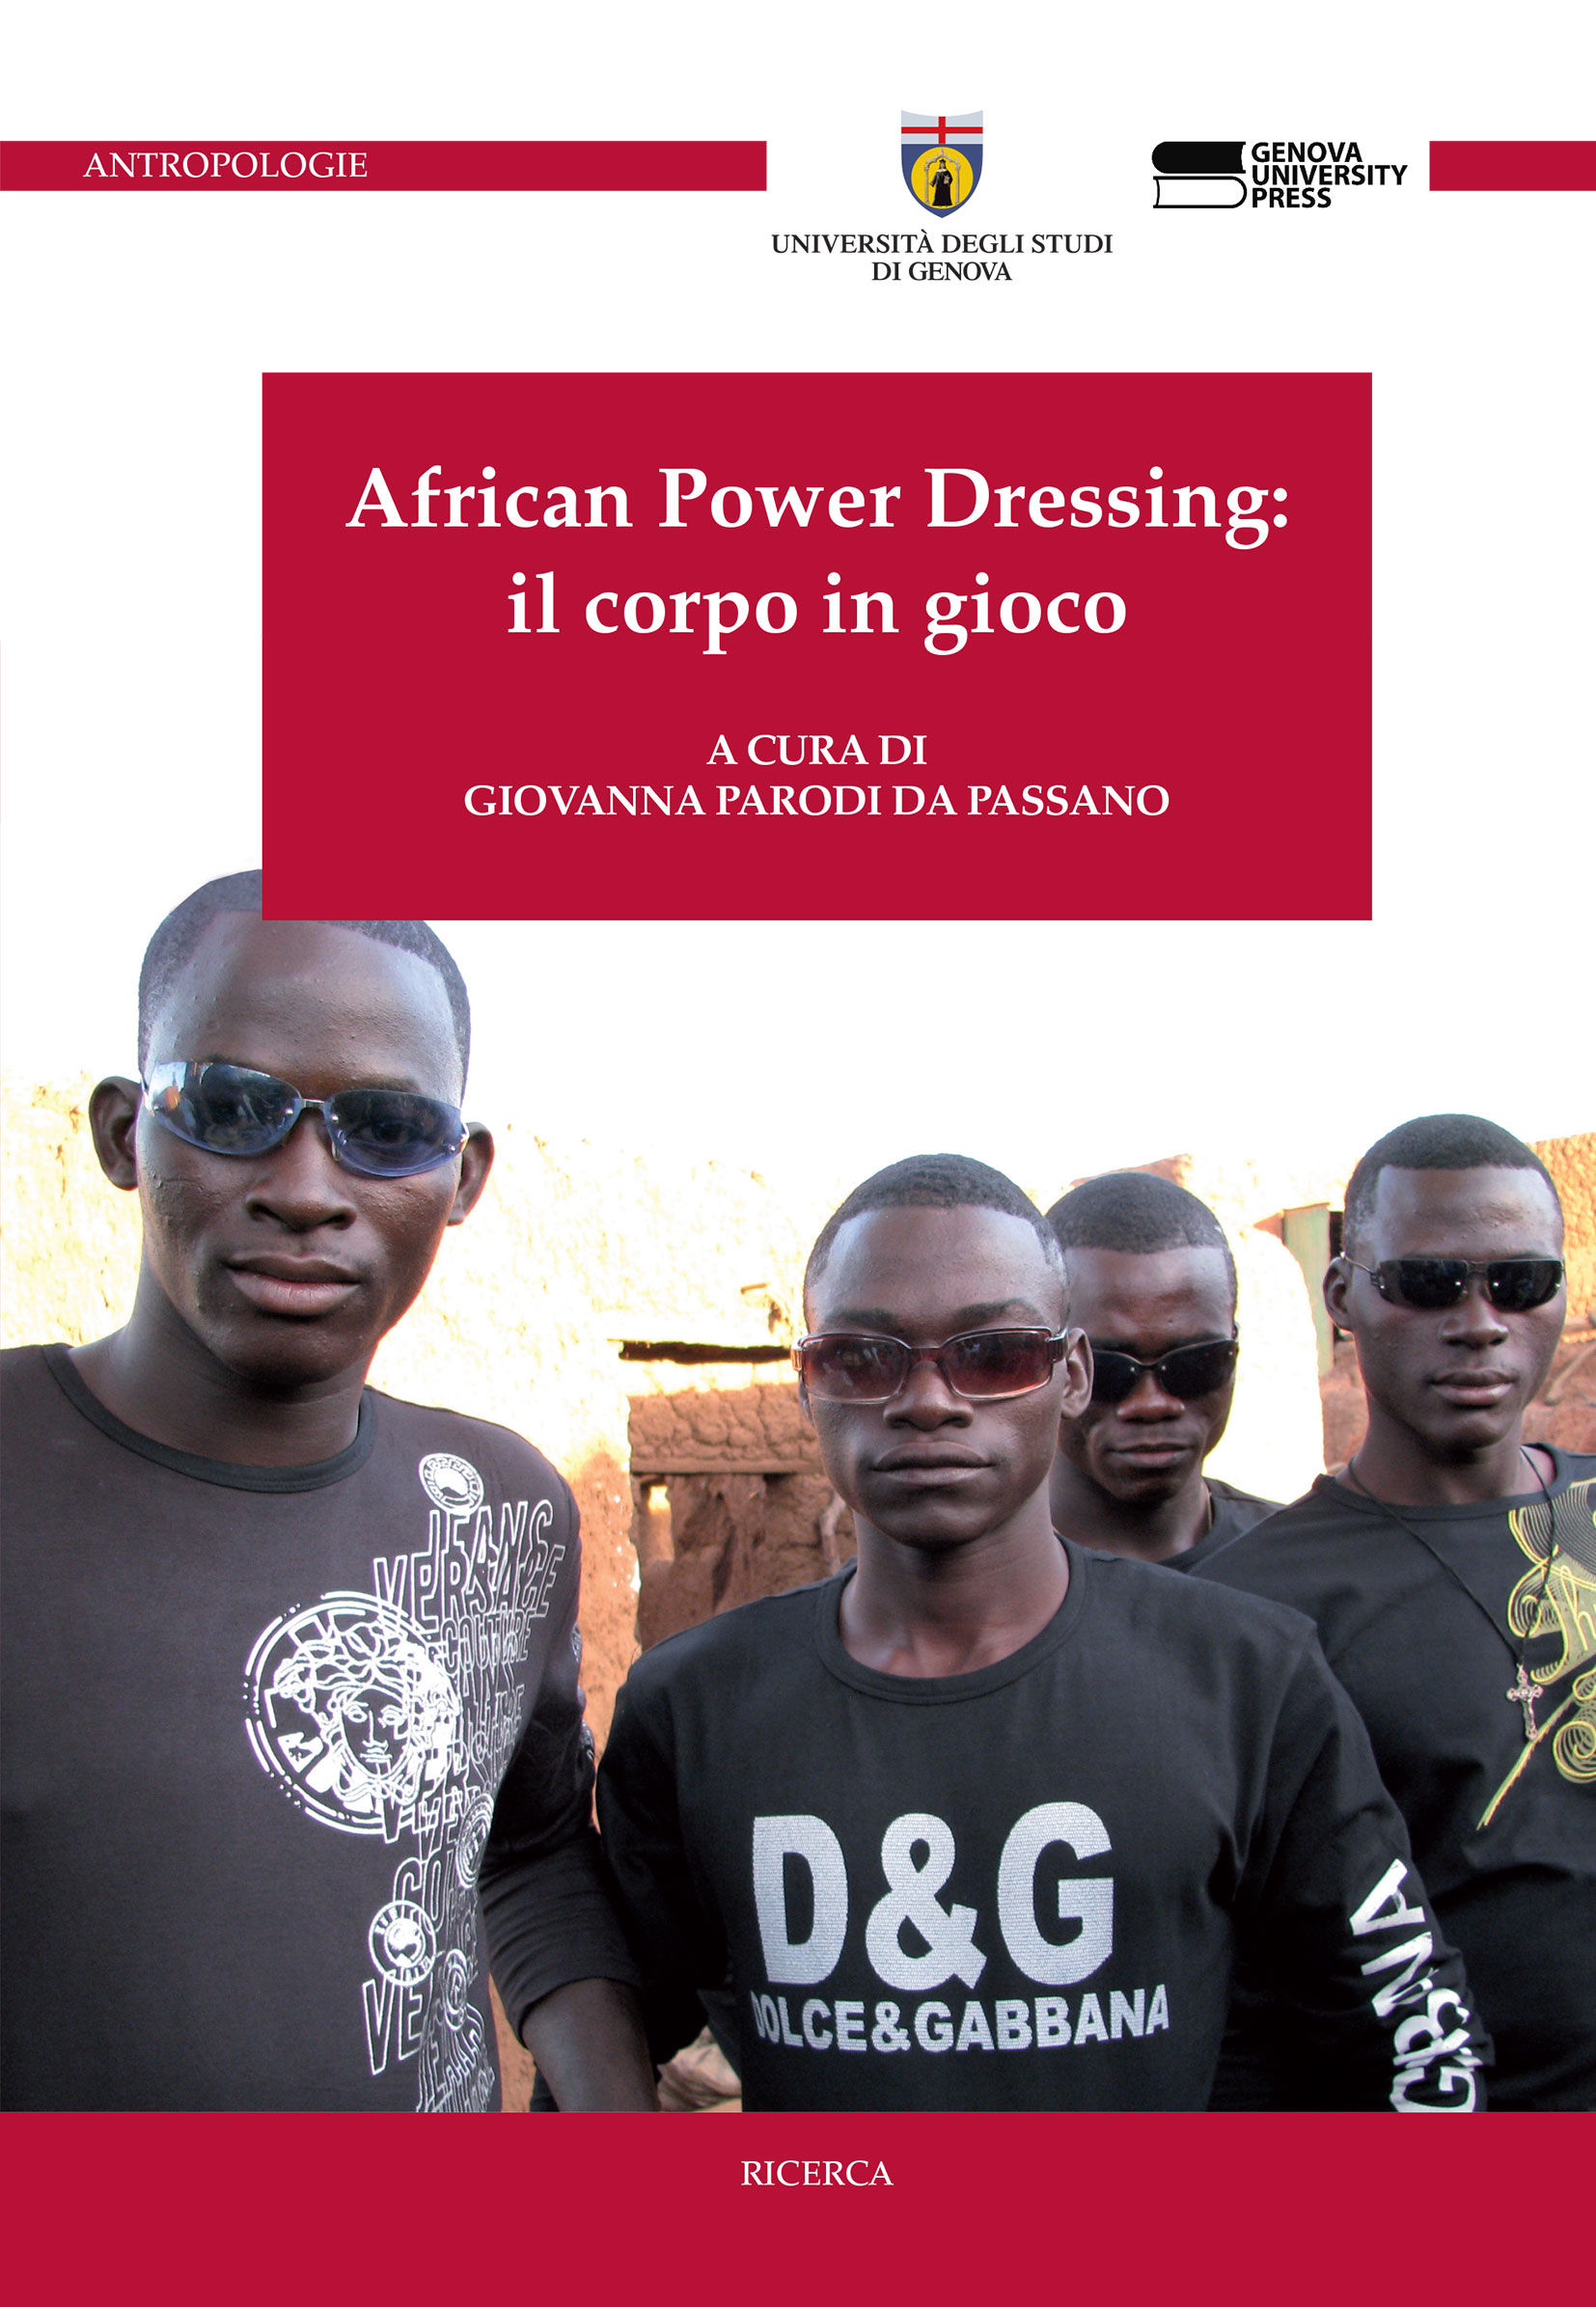 African Power Dressing